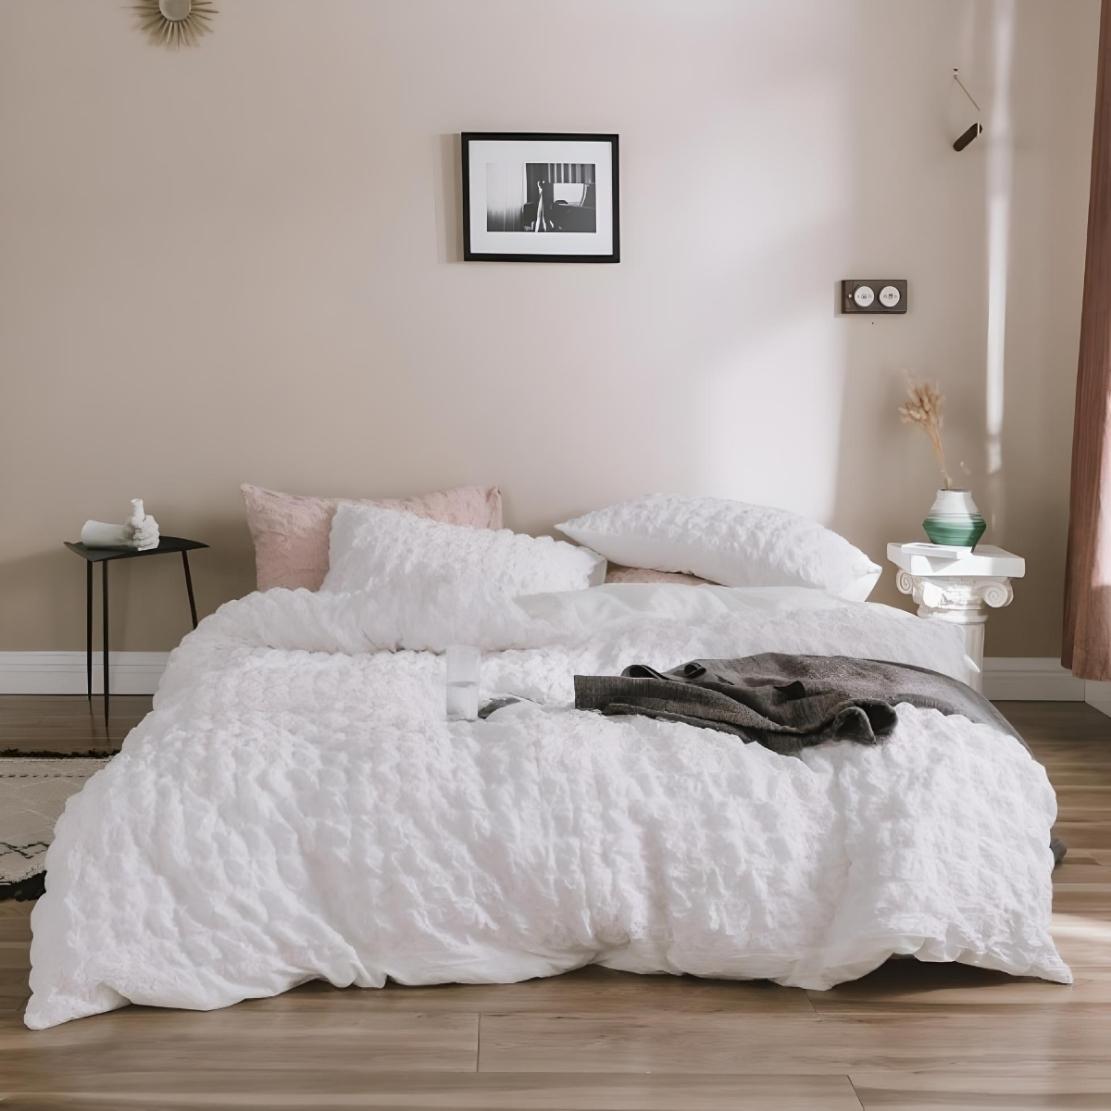 White dreamy bubble bedding set in modern nordic bedroom